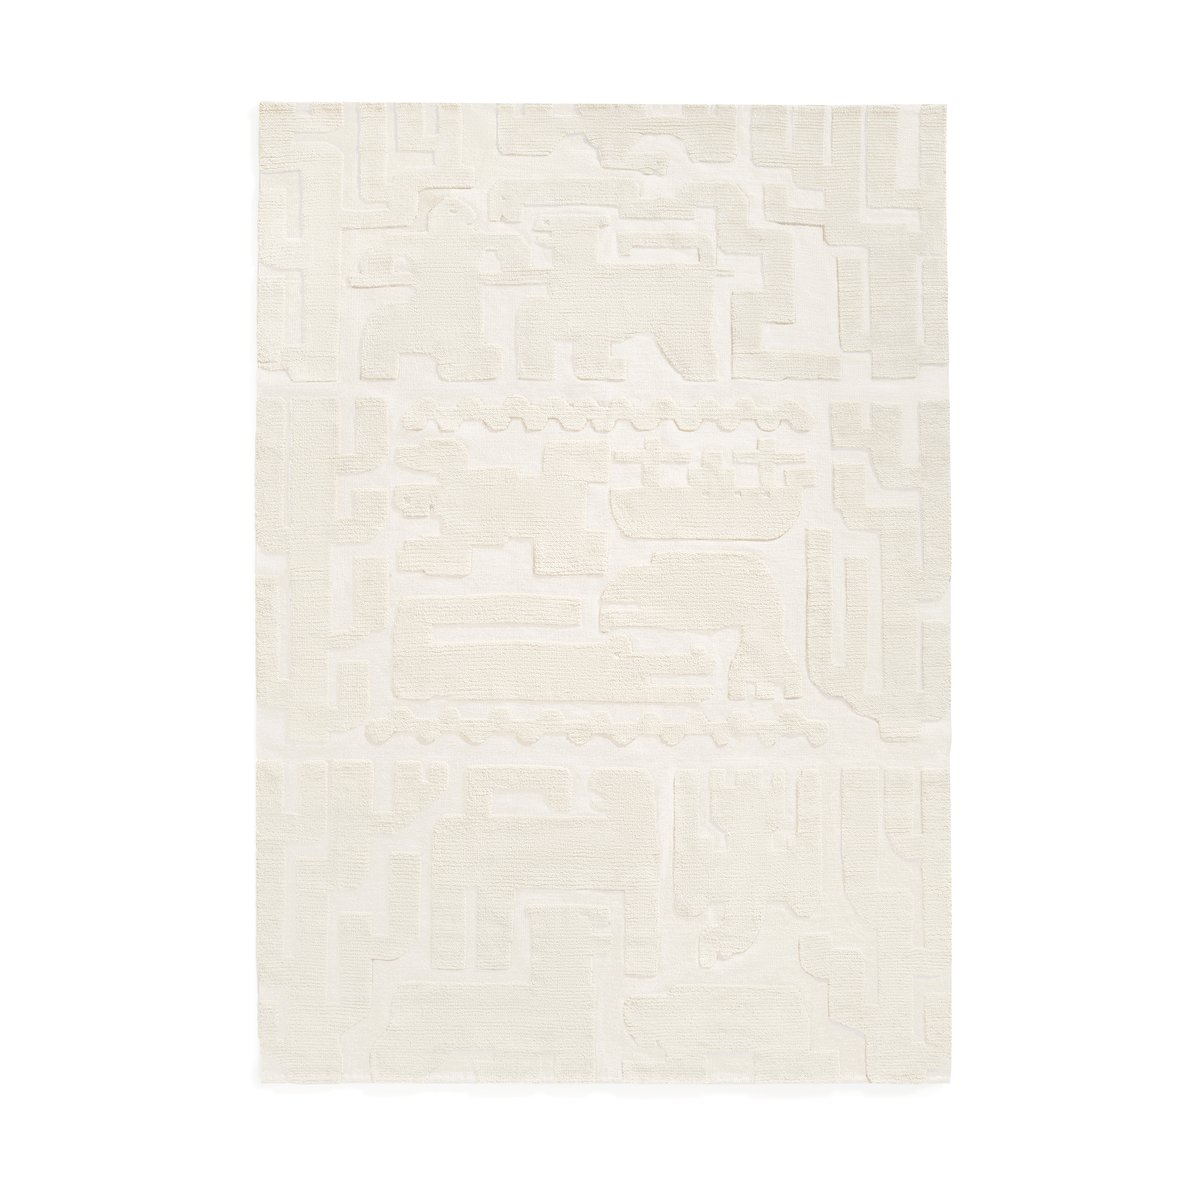 Layered Stig Lindberg Gunnel -villamatto Bone white 180 x 270 cm